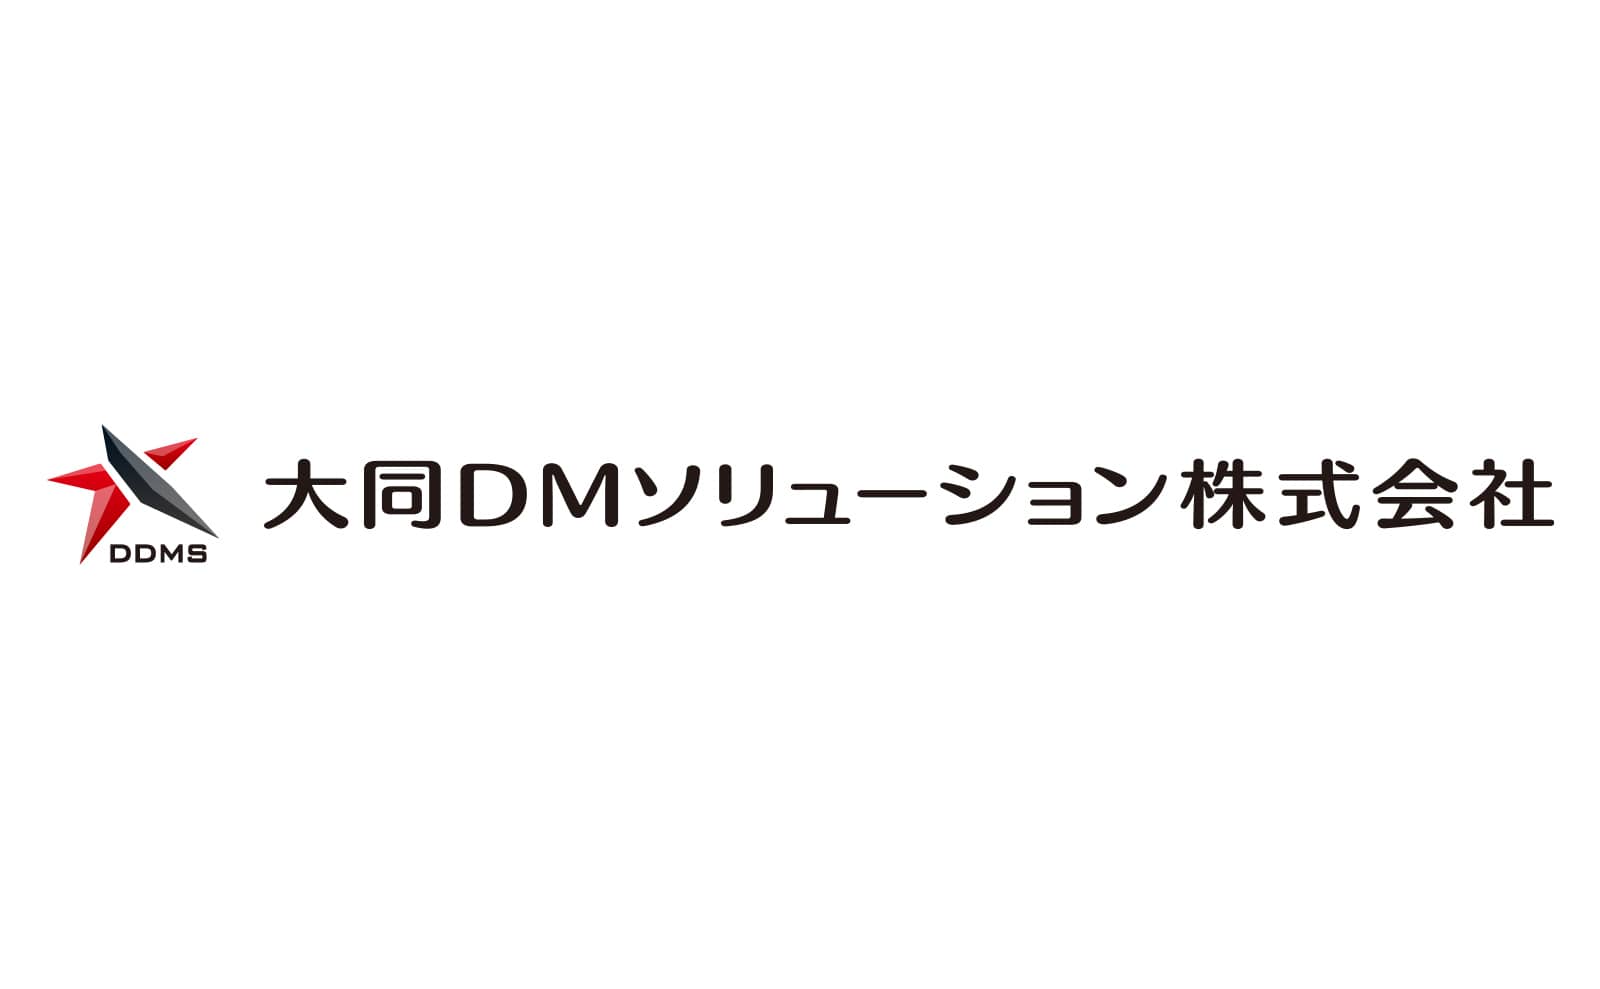 Daido Die & Mold Steel Solutions Co., Ltd.